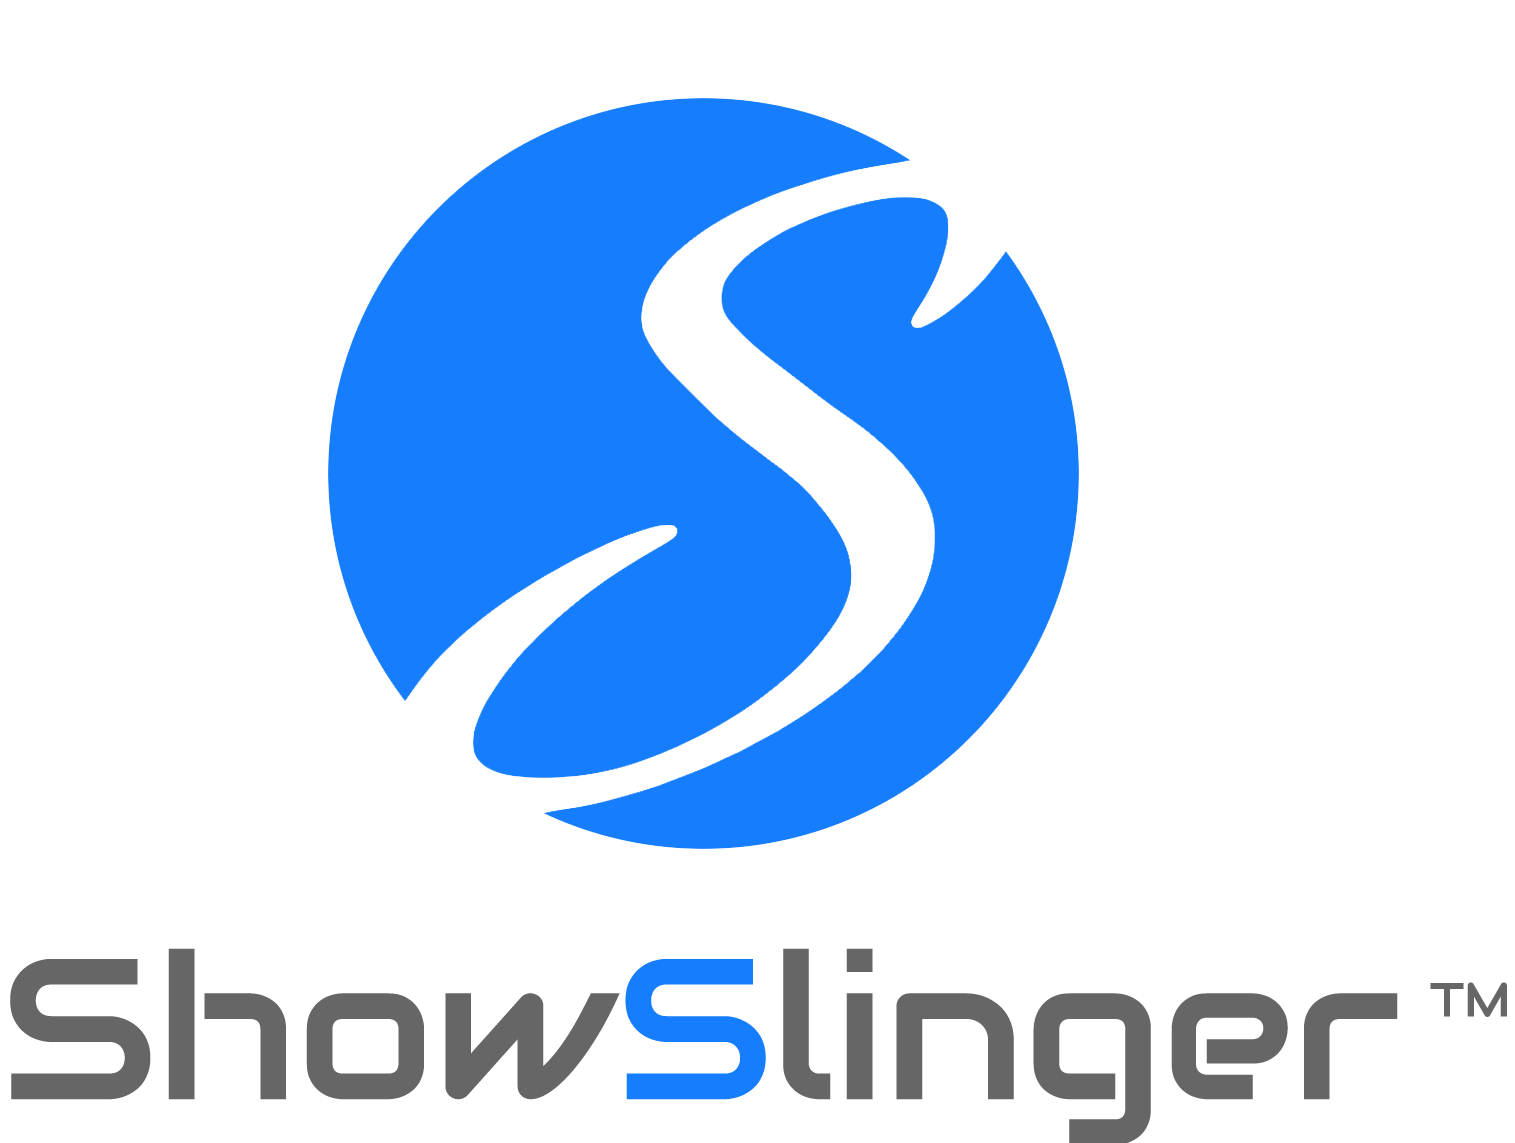 SS-logo-(large)